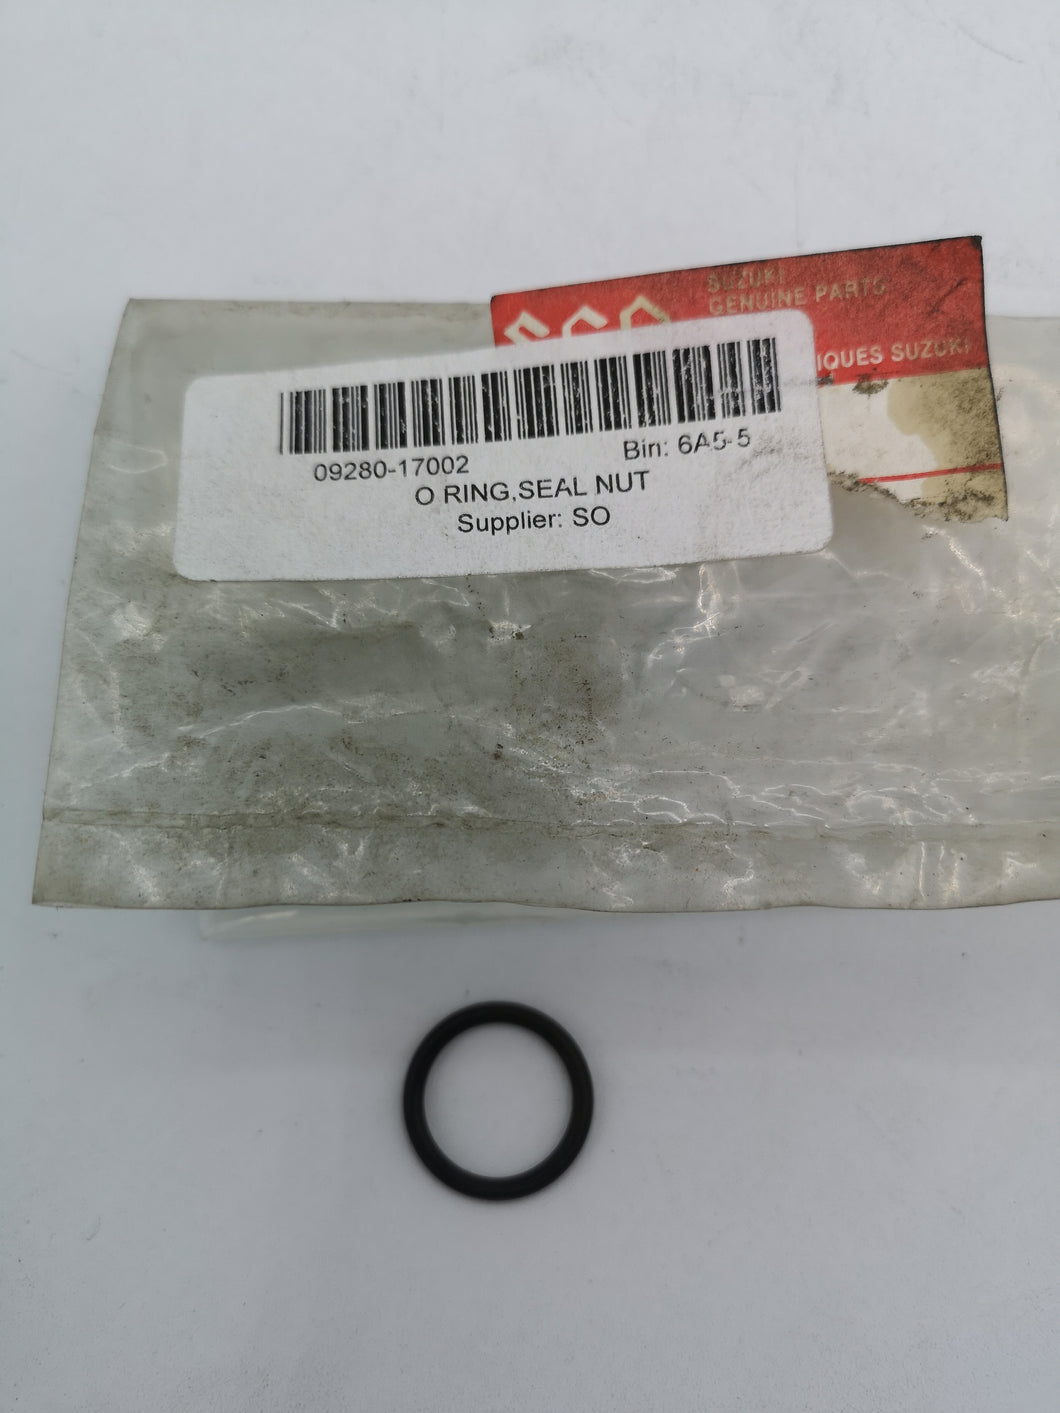 Suzuki O-Ring Seal Nut  09280-17002